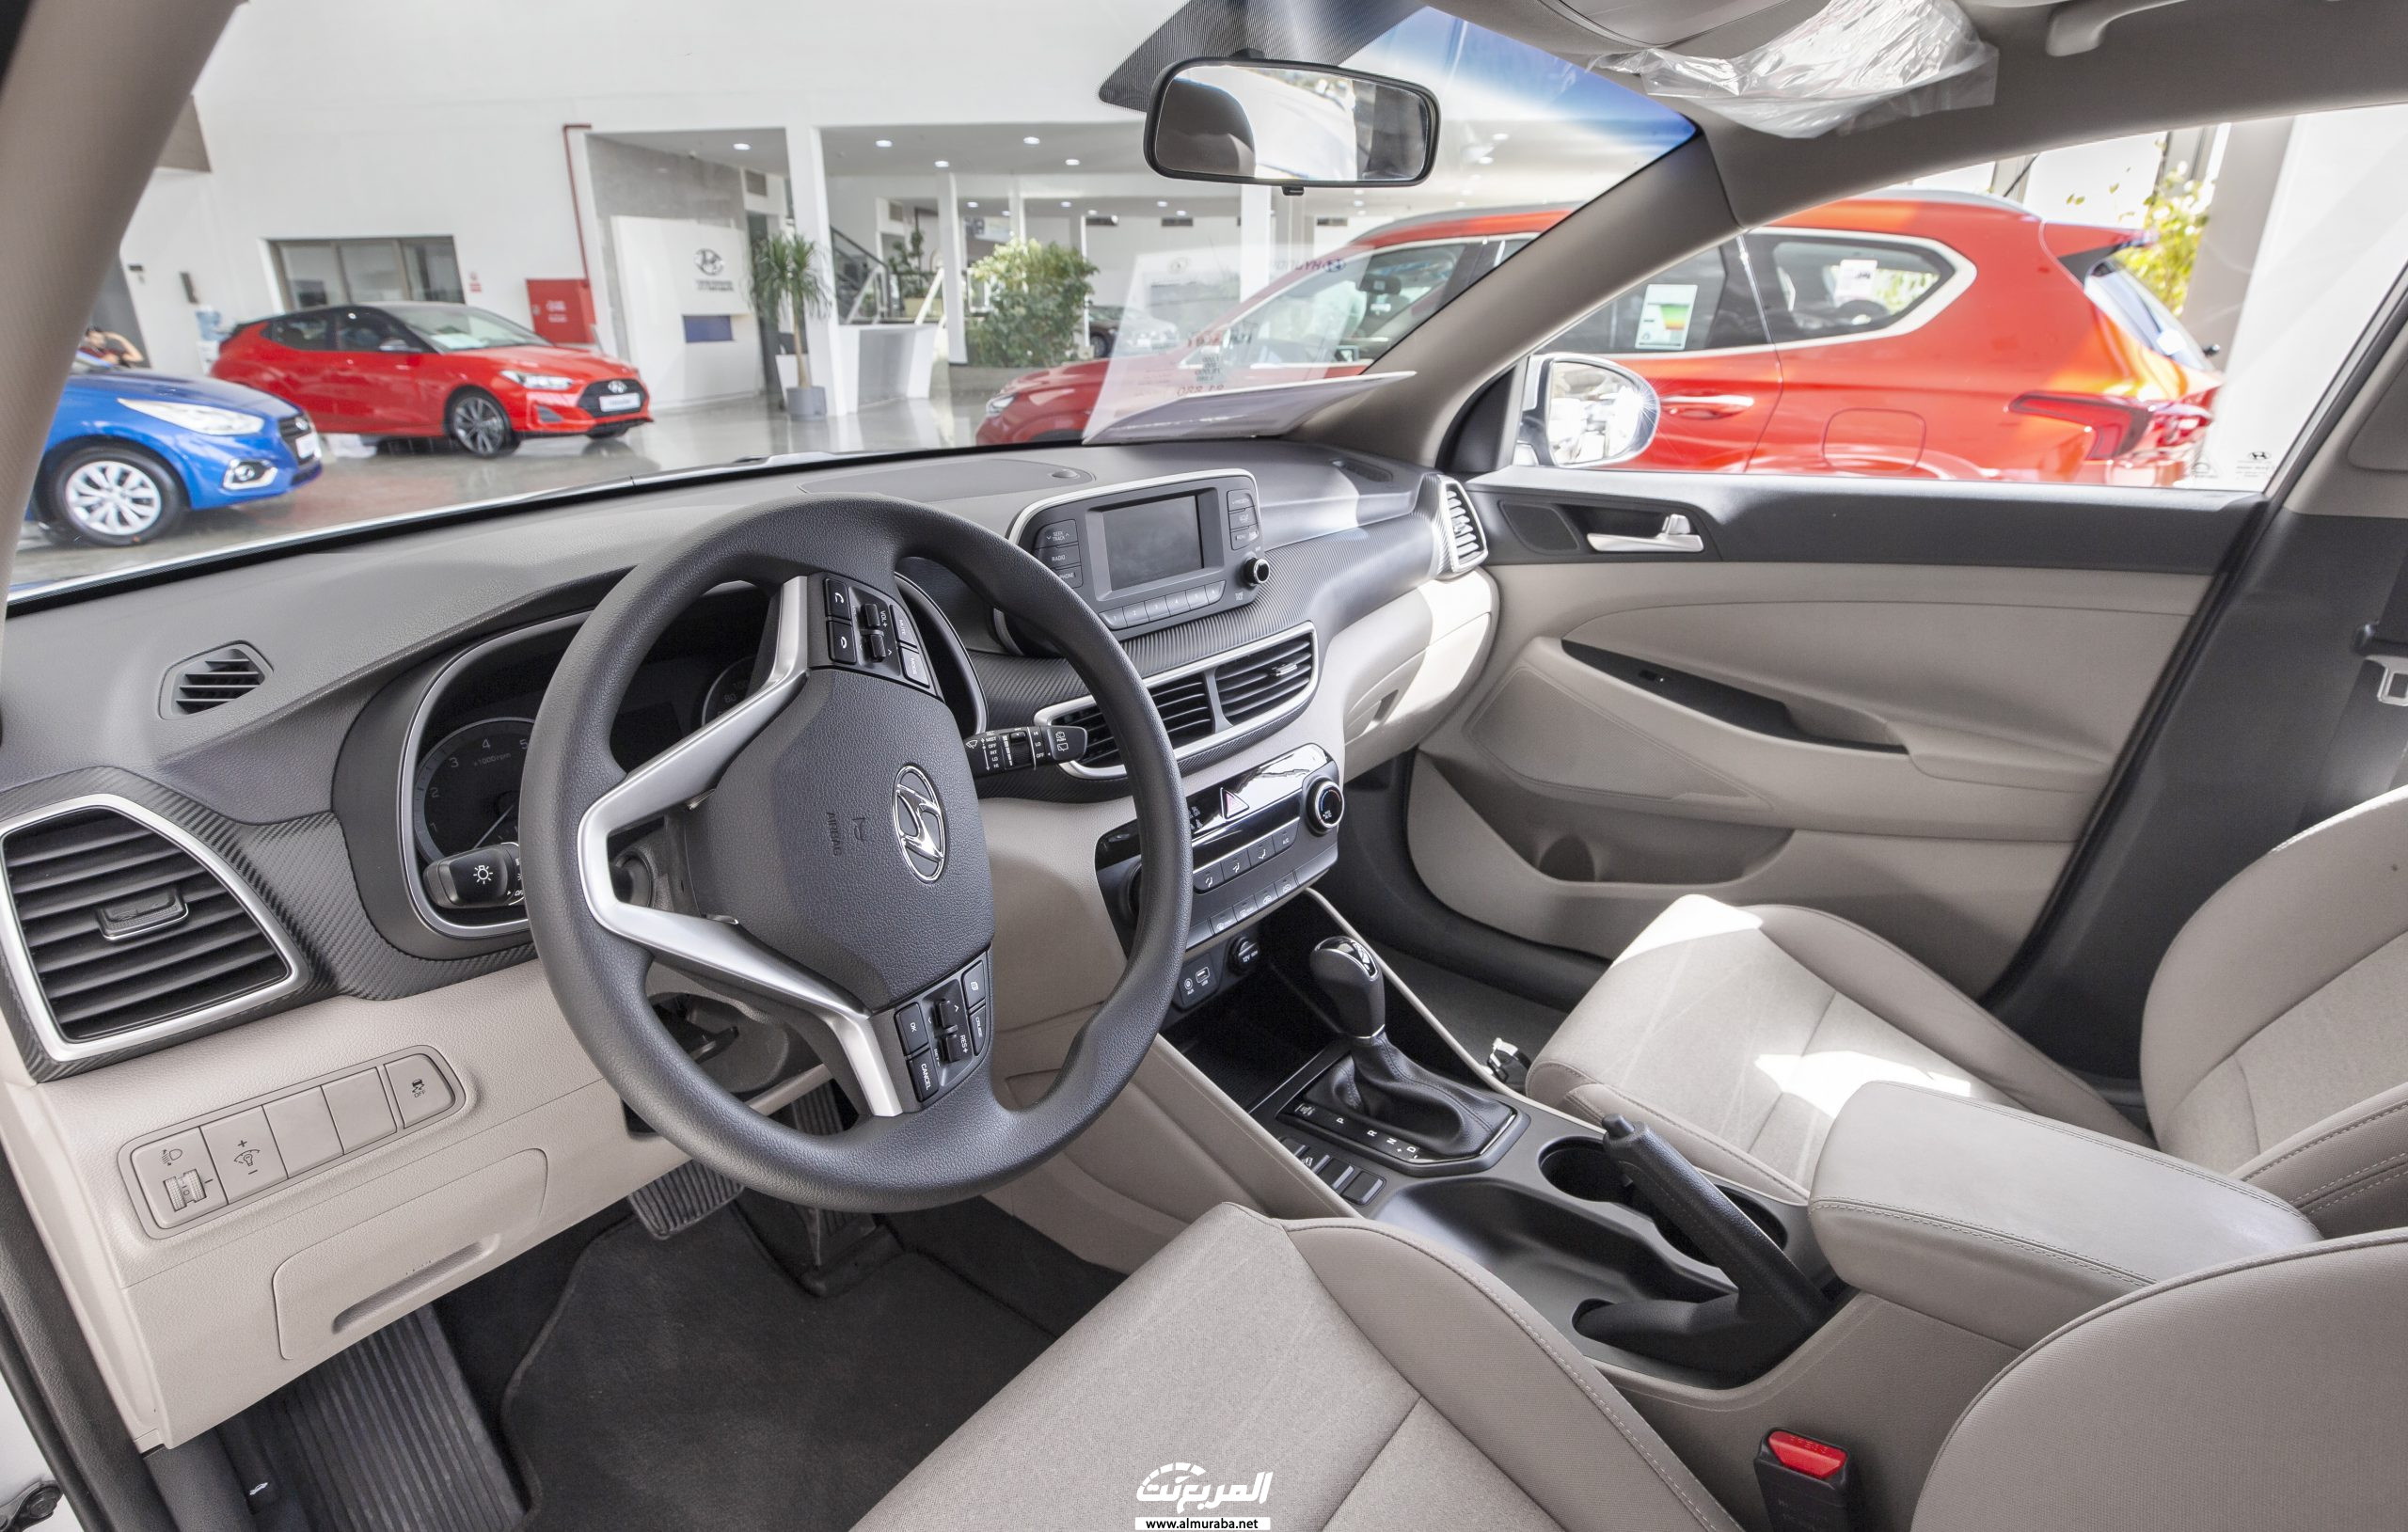 اسعار هيونداي توسان 2020 في السعودية Hyundai Tucson 60